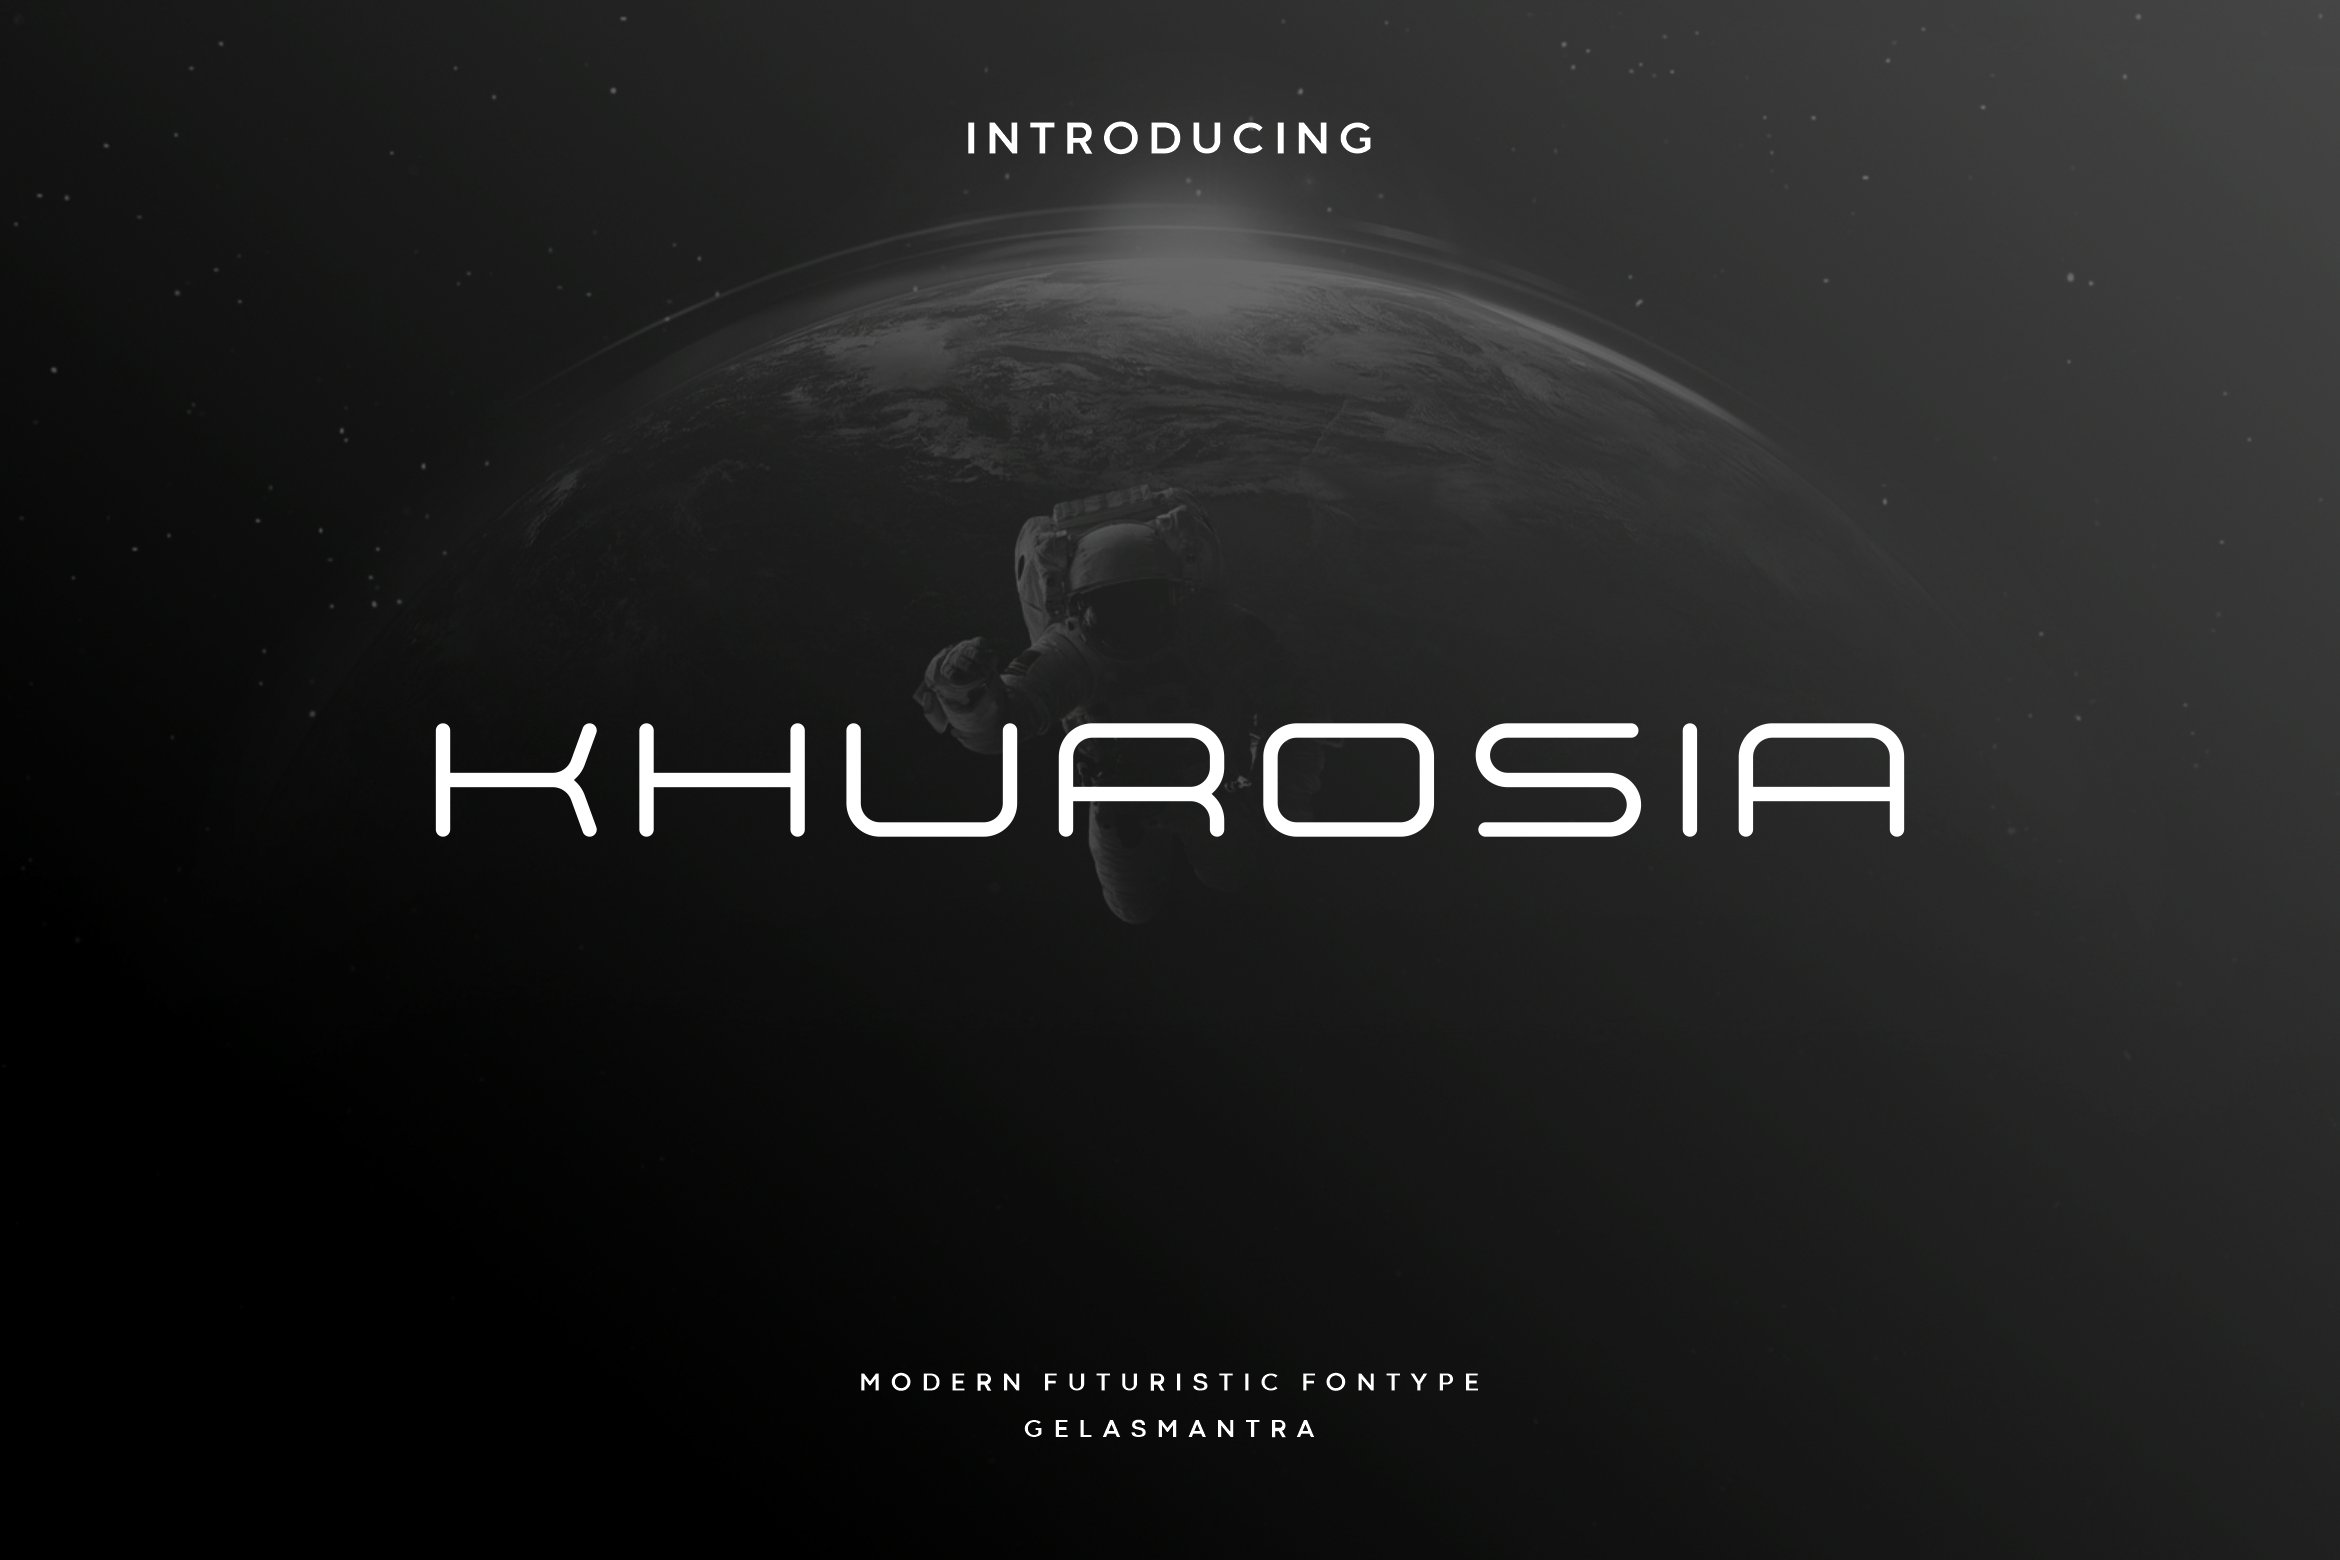 Khorusia cover image.